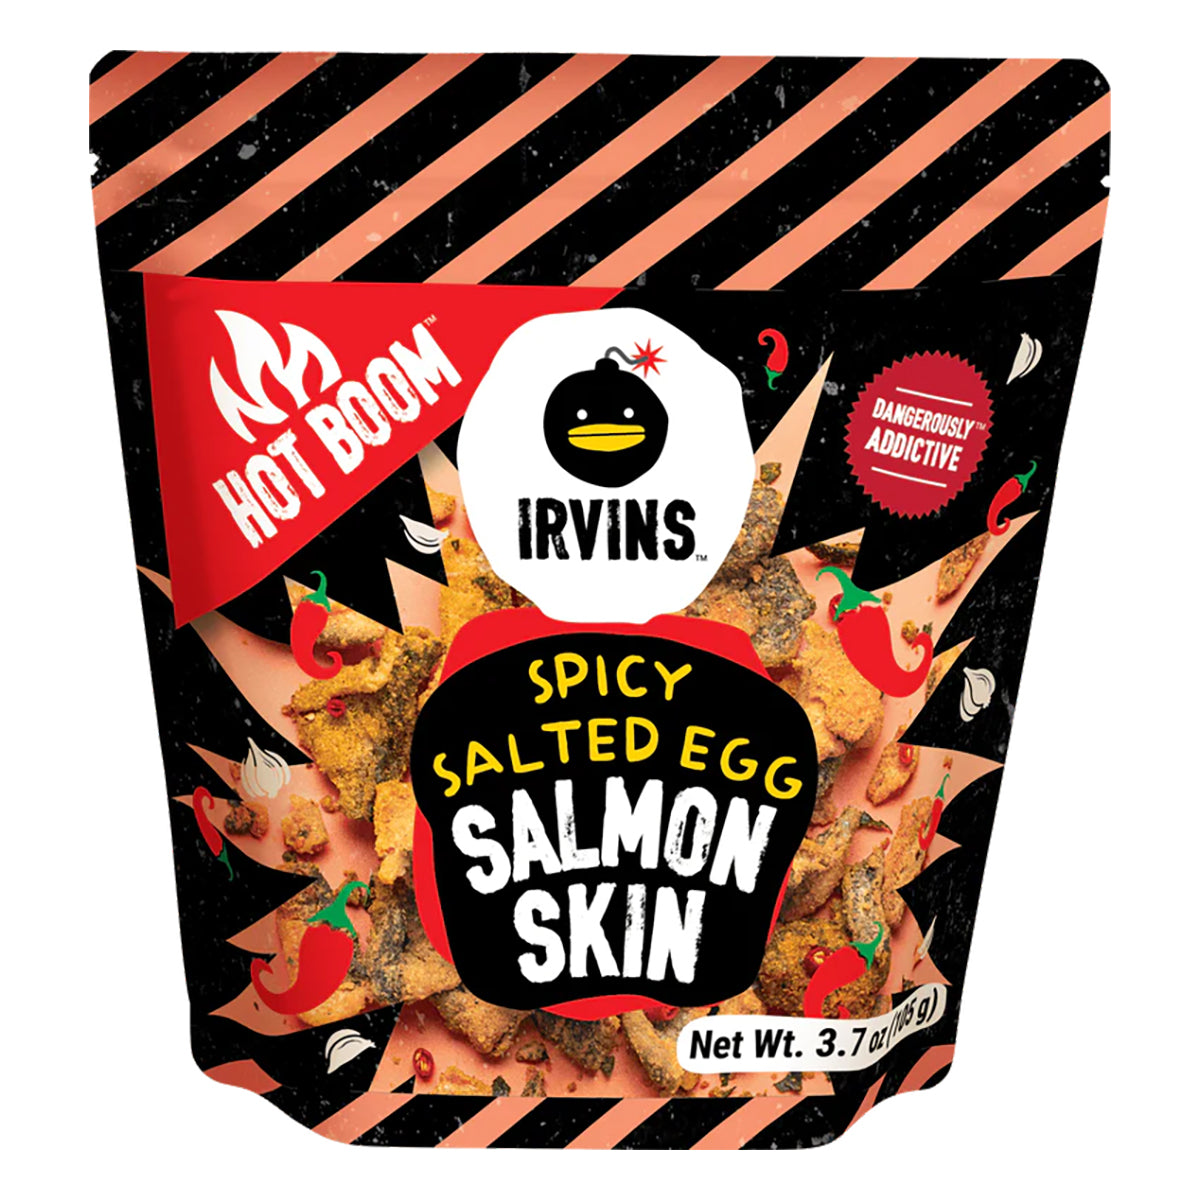 irvins salted egg hot boom spicy salmon skin - 105g